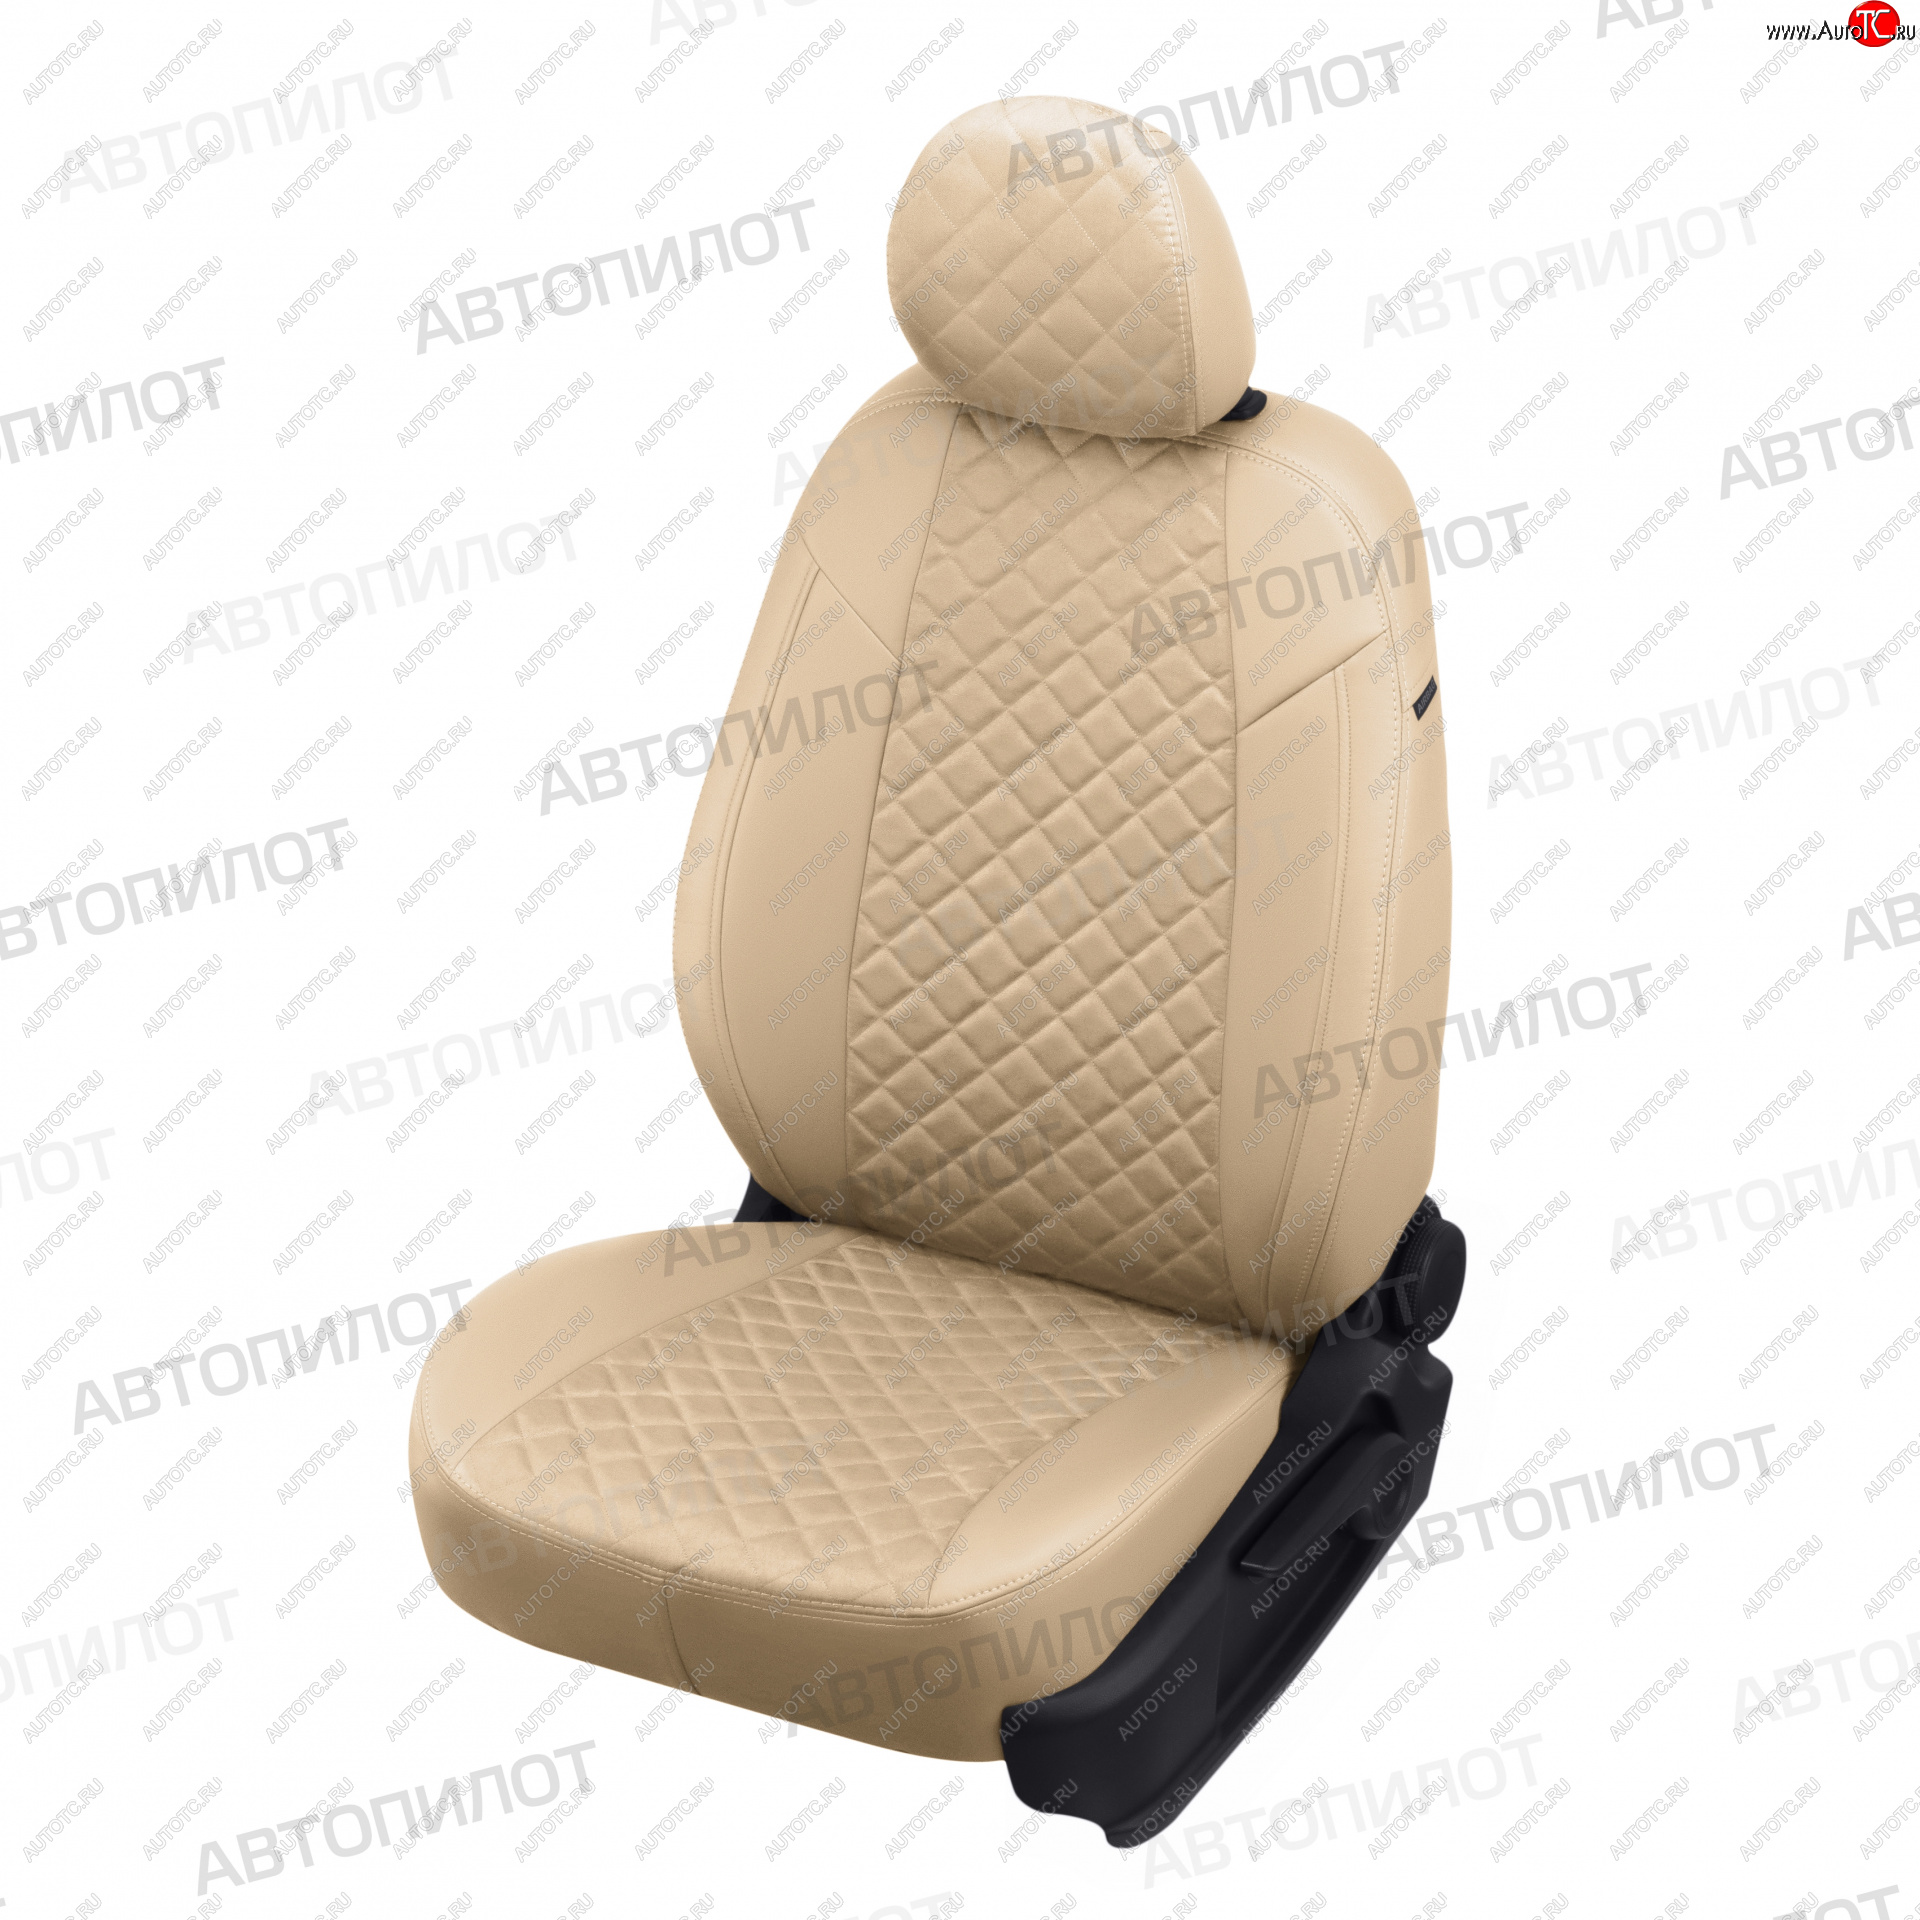 7 799 р. Чехлы сидений (экокожа/алькантара) Автопилот Ромб  BMW X1  E84 (2009-2015) (бежевый)